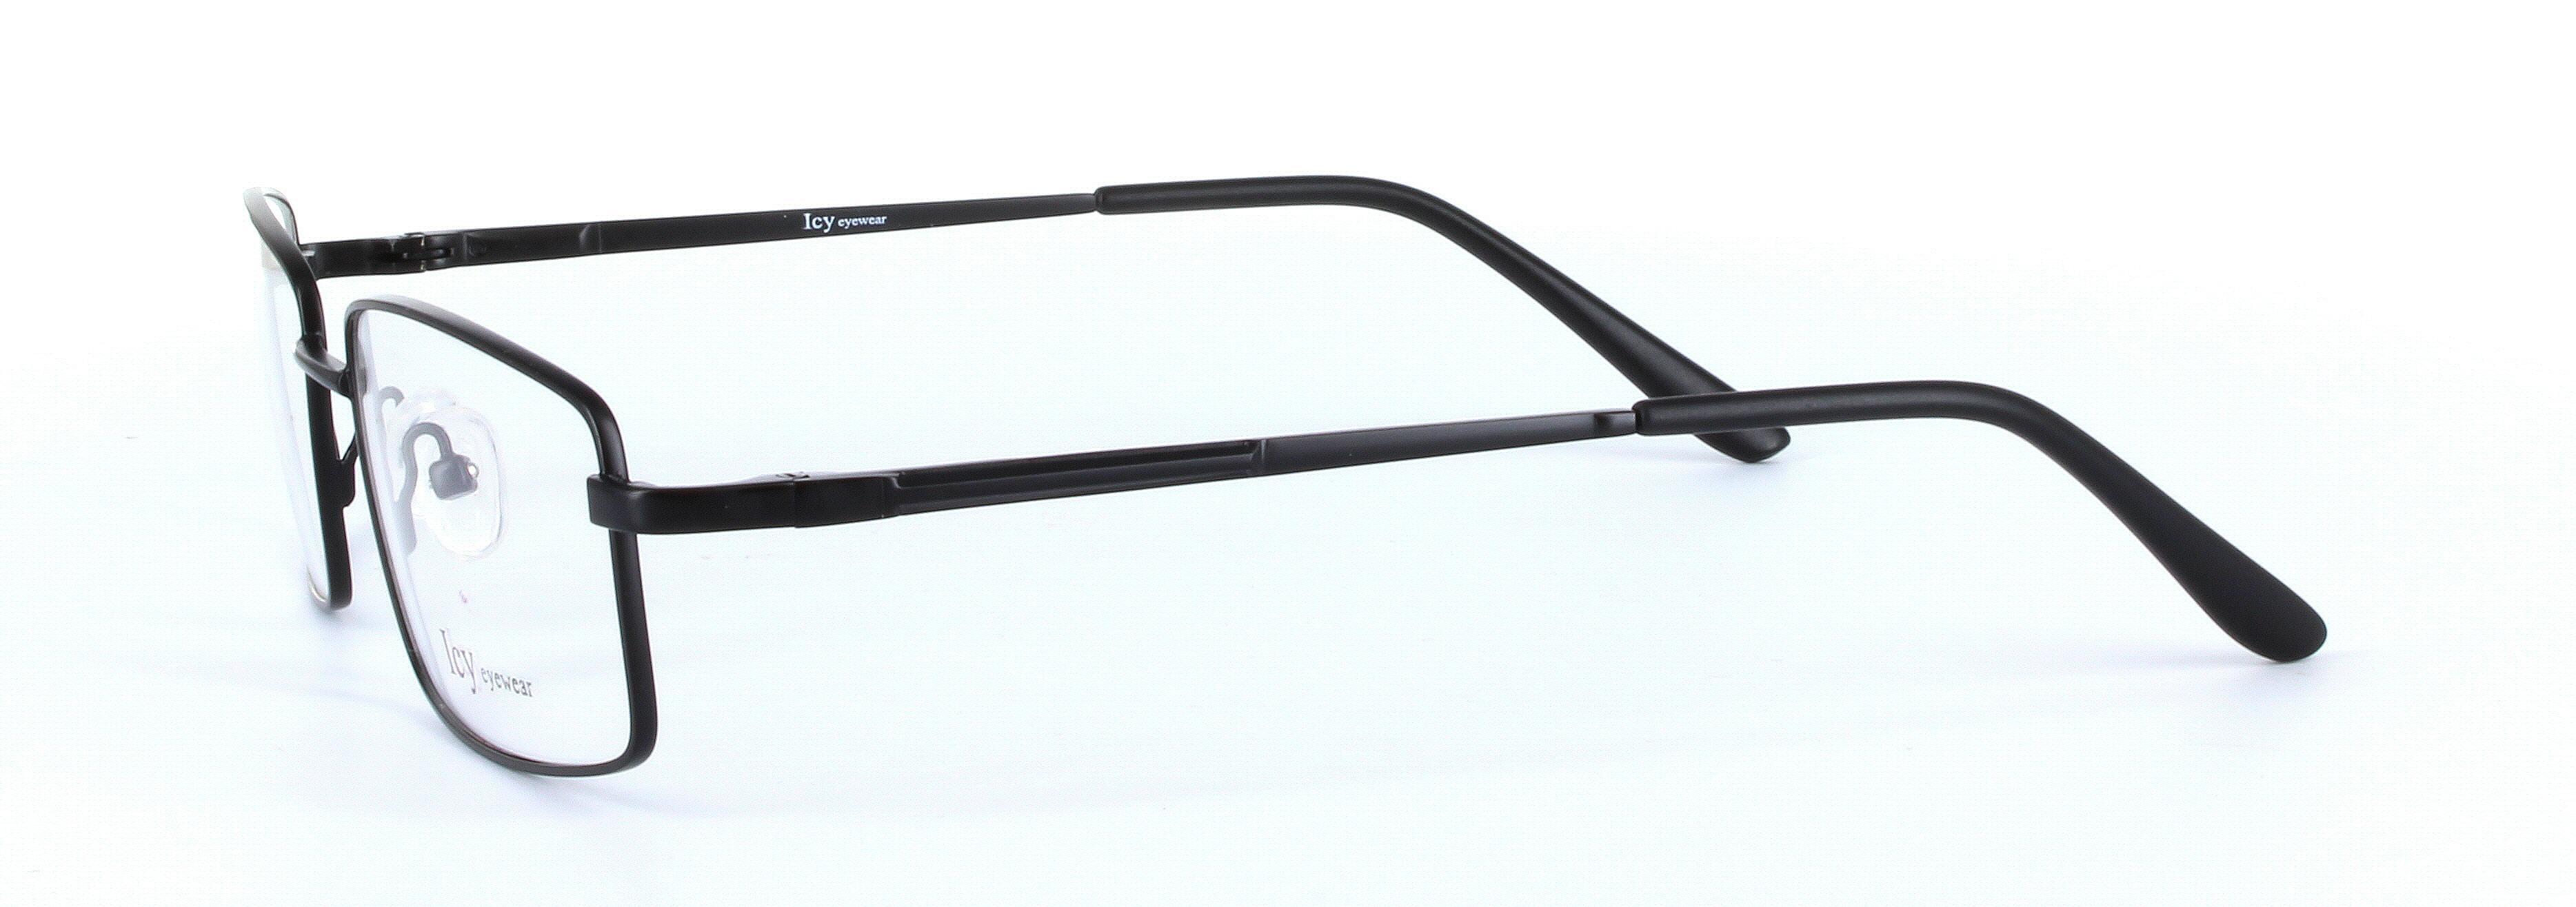 Chester Black Full Rim Rectangular Metal Glasses - Image View 2